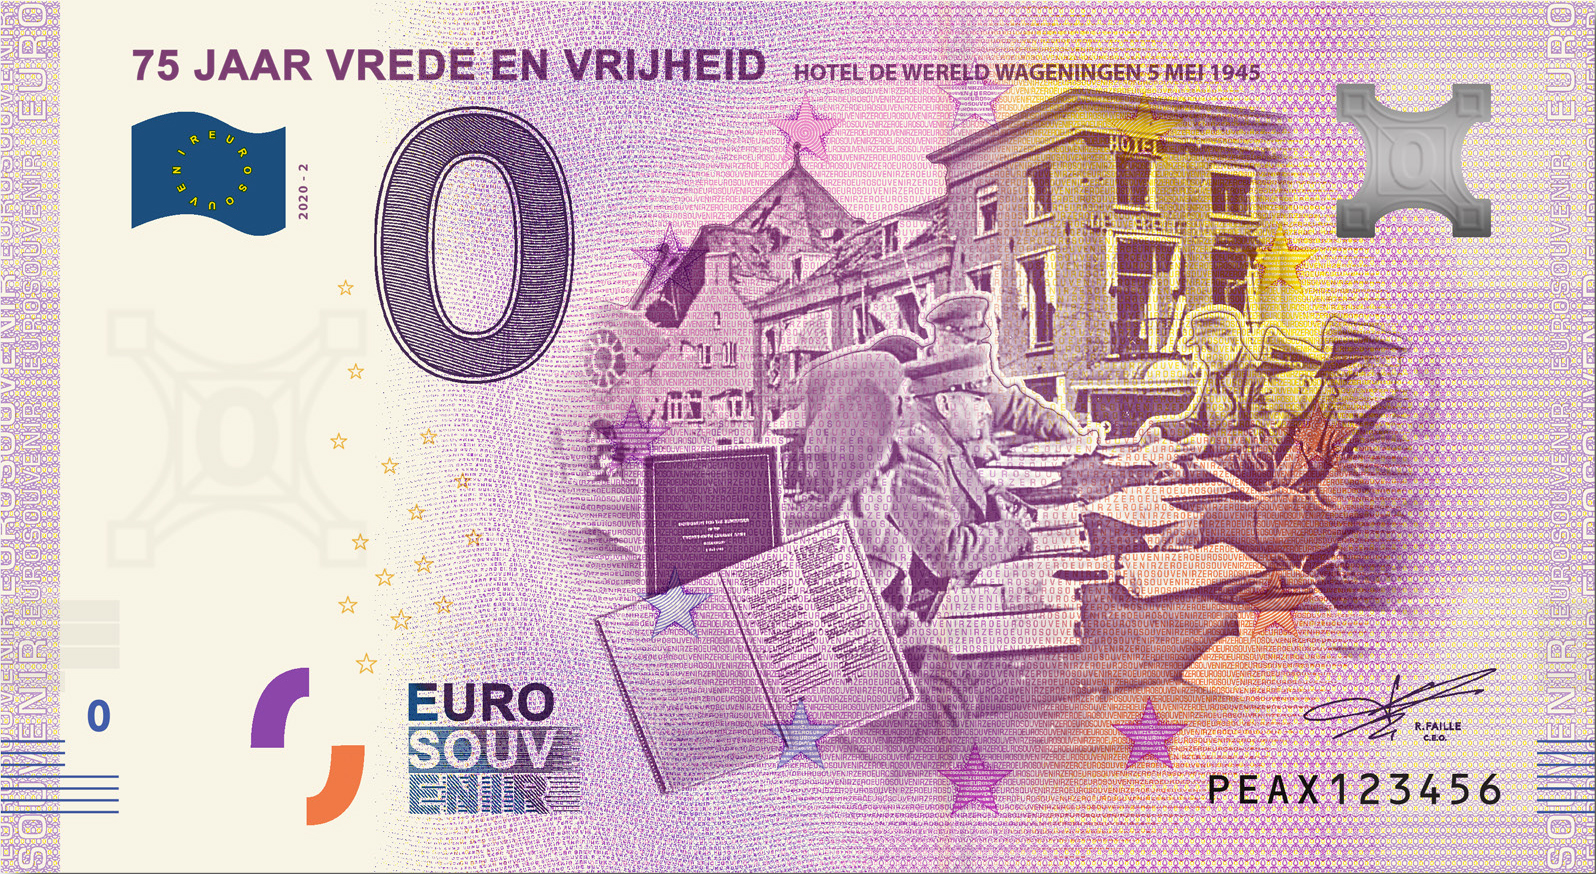 0 Euro souvenir note Nederland 2020 - Hotel de Wereld